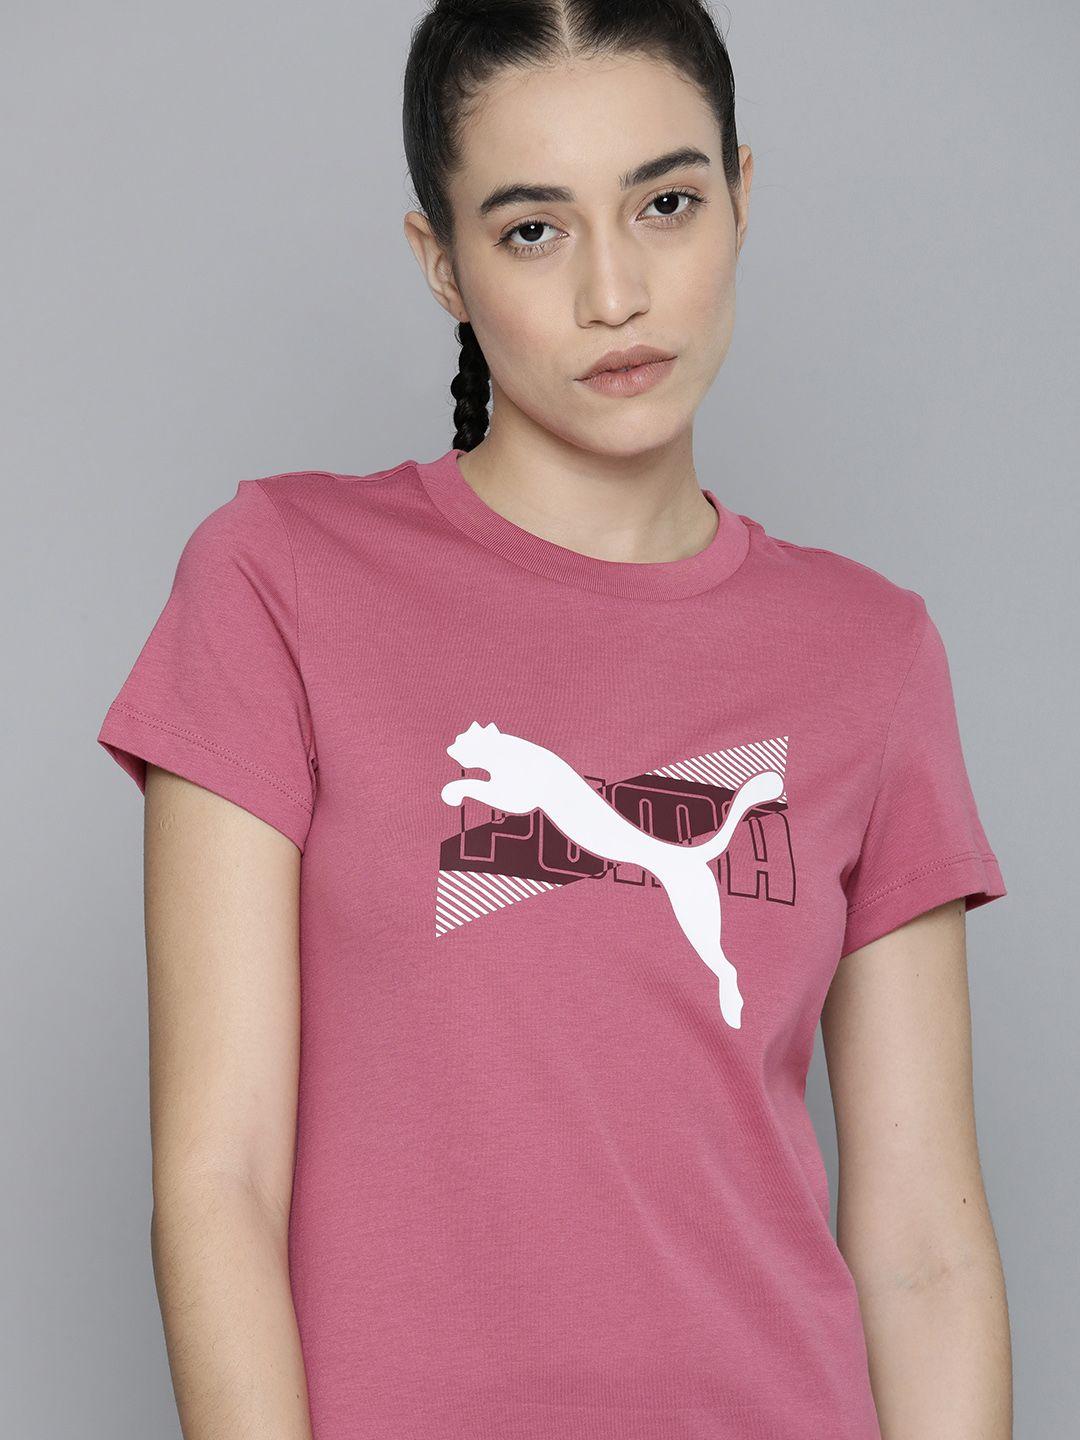 Puma Women Mauve Pink Power Graphic Brand Logo Print Pure Cotton Knitted T-Shirt